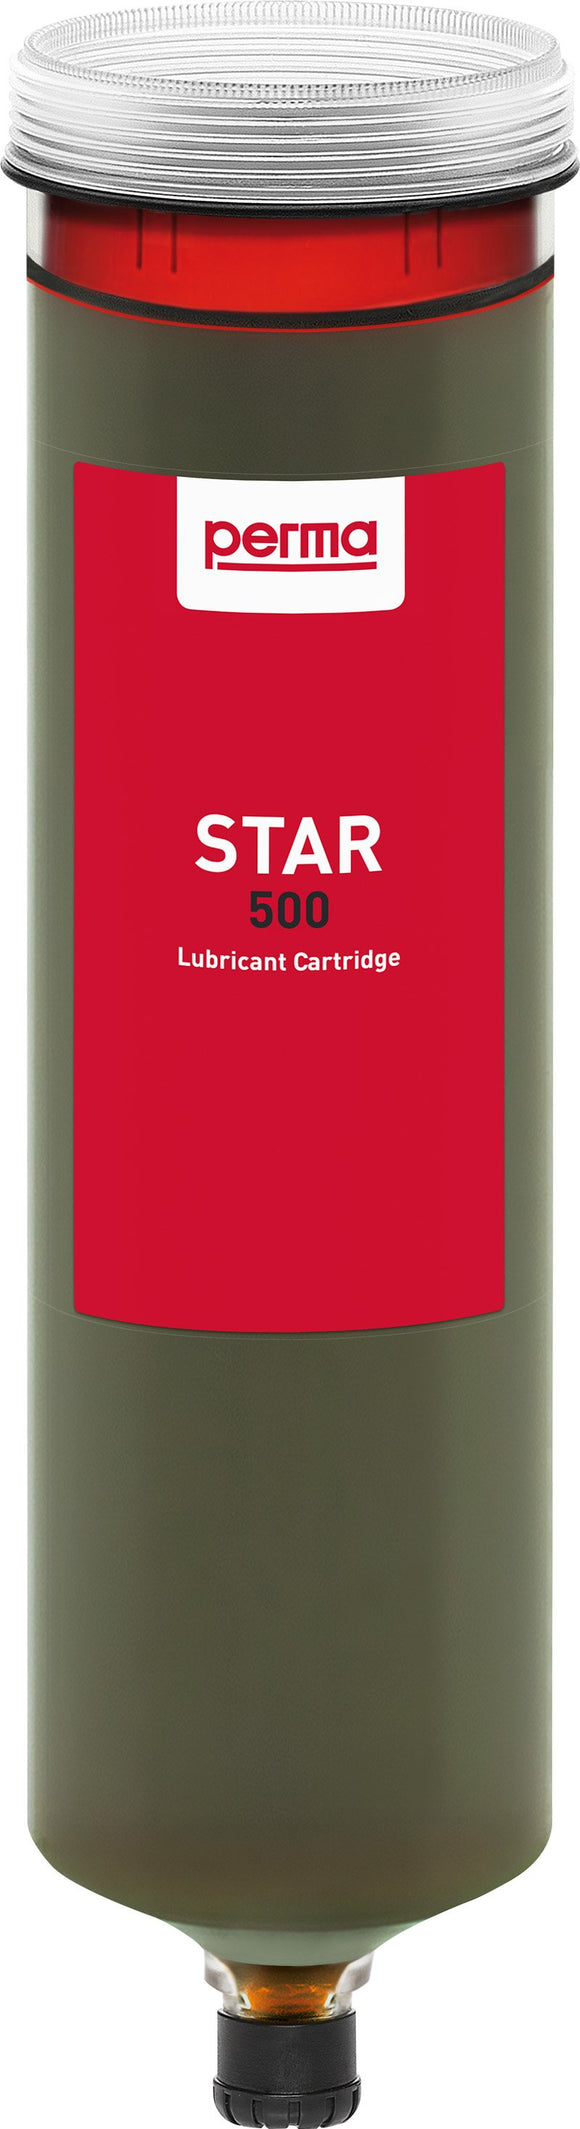 Perma Star LC 500 with Perma Multipurpose Grease SF01